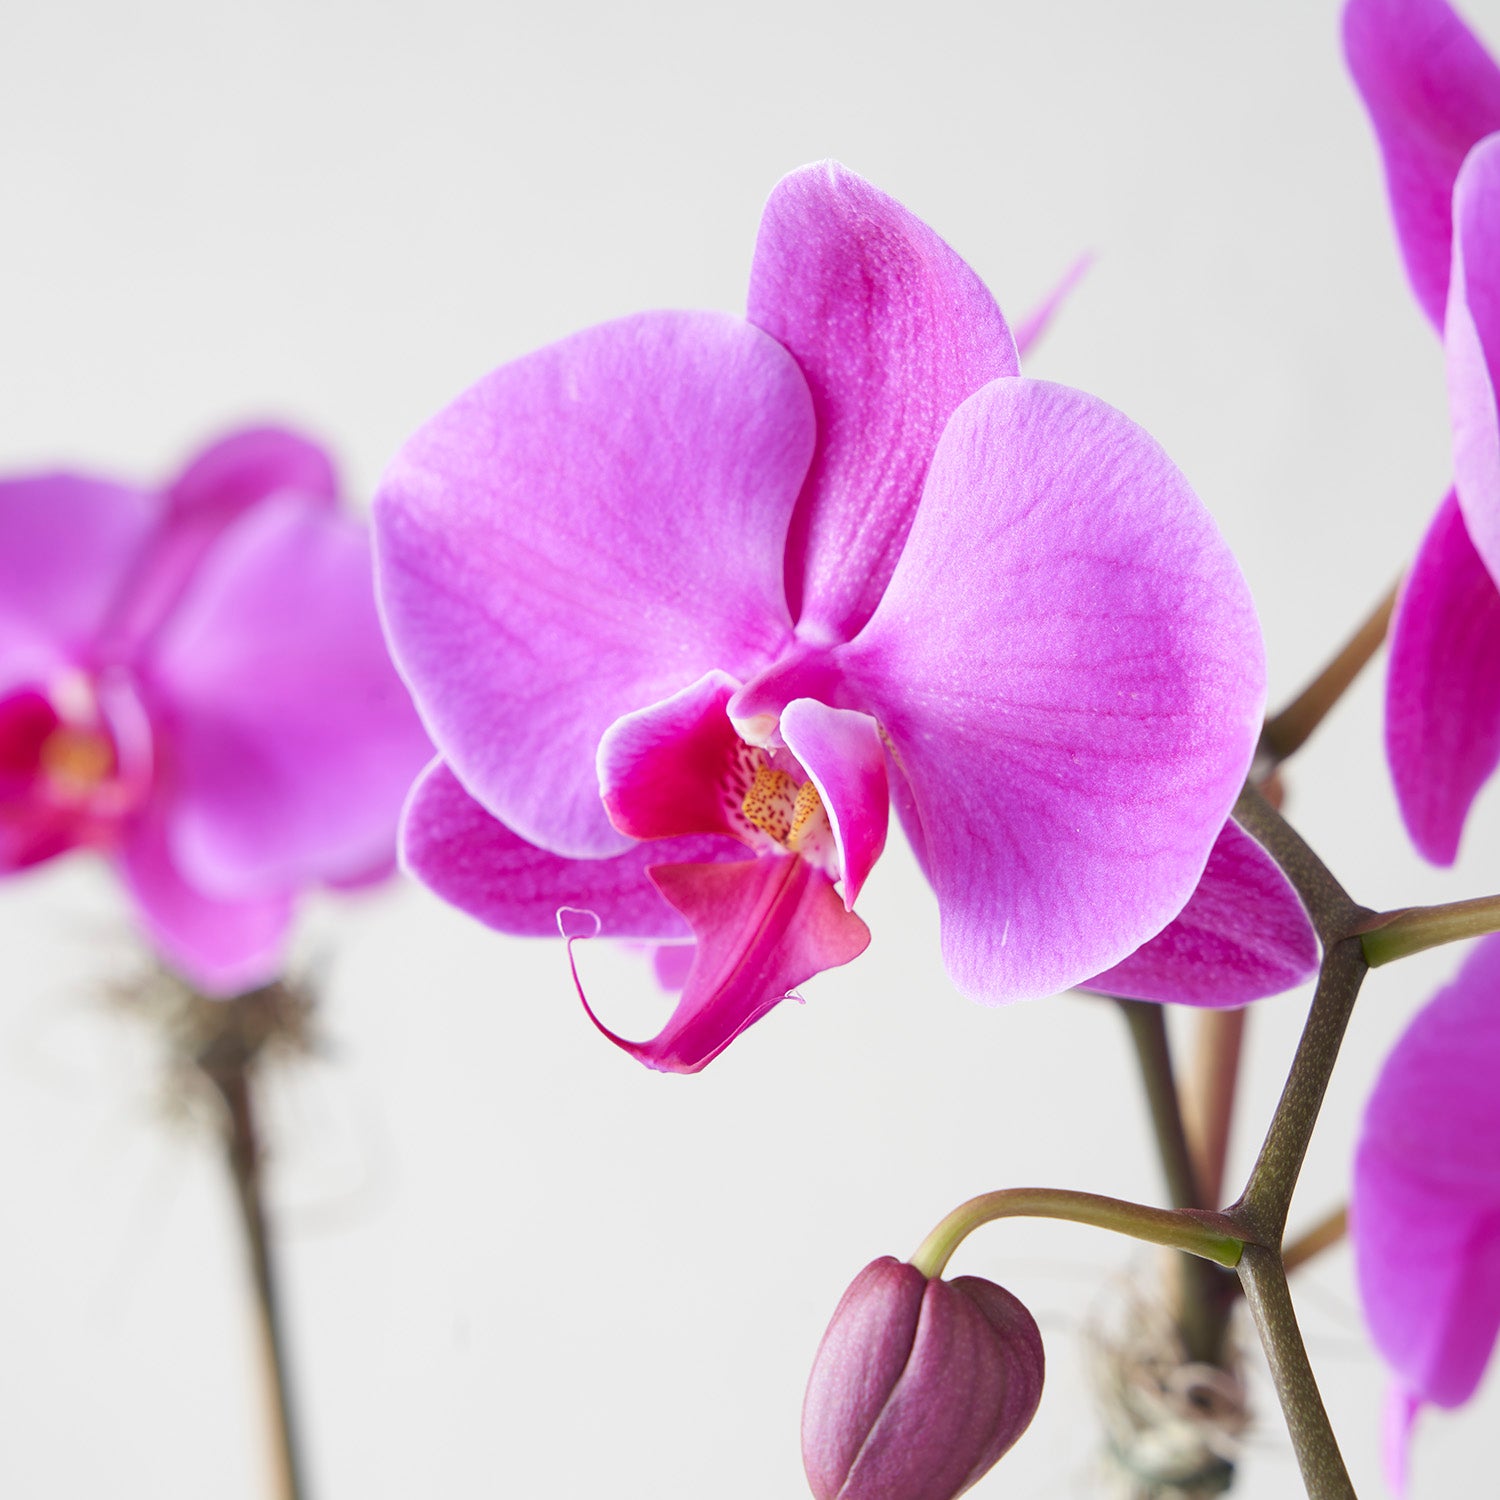 Closeup of fuchsia phalaenopsis orchid flowers on white background.